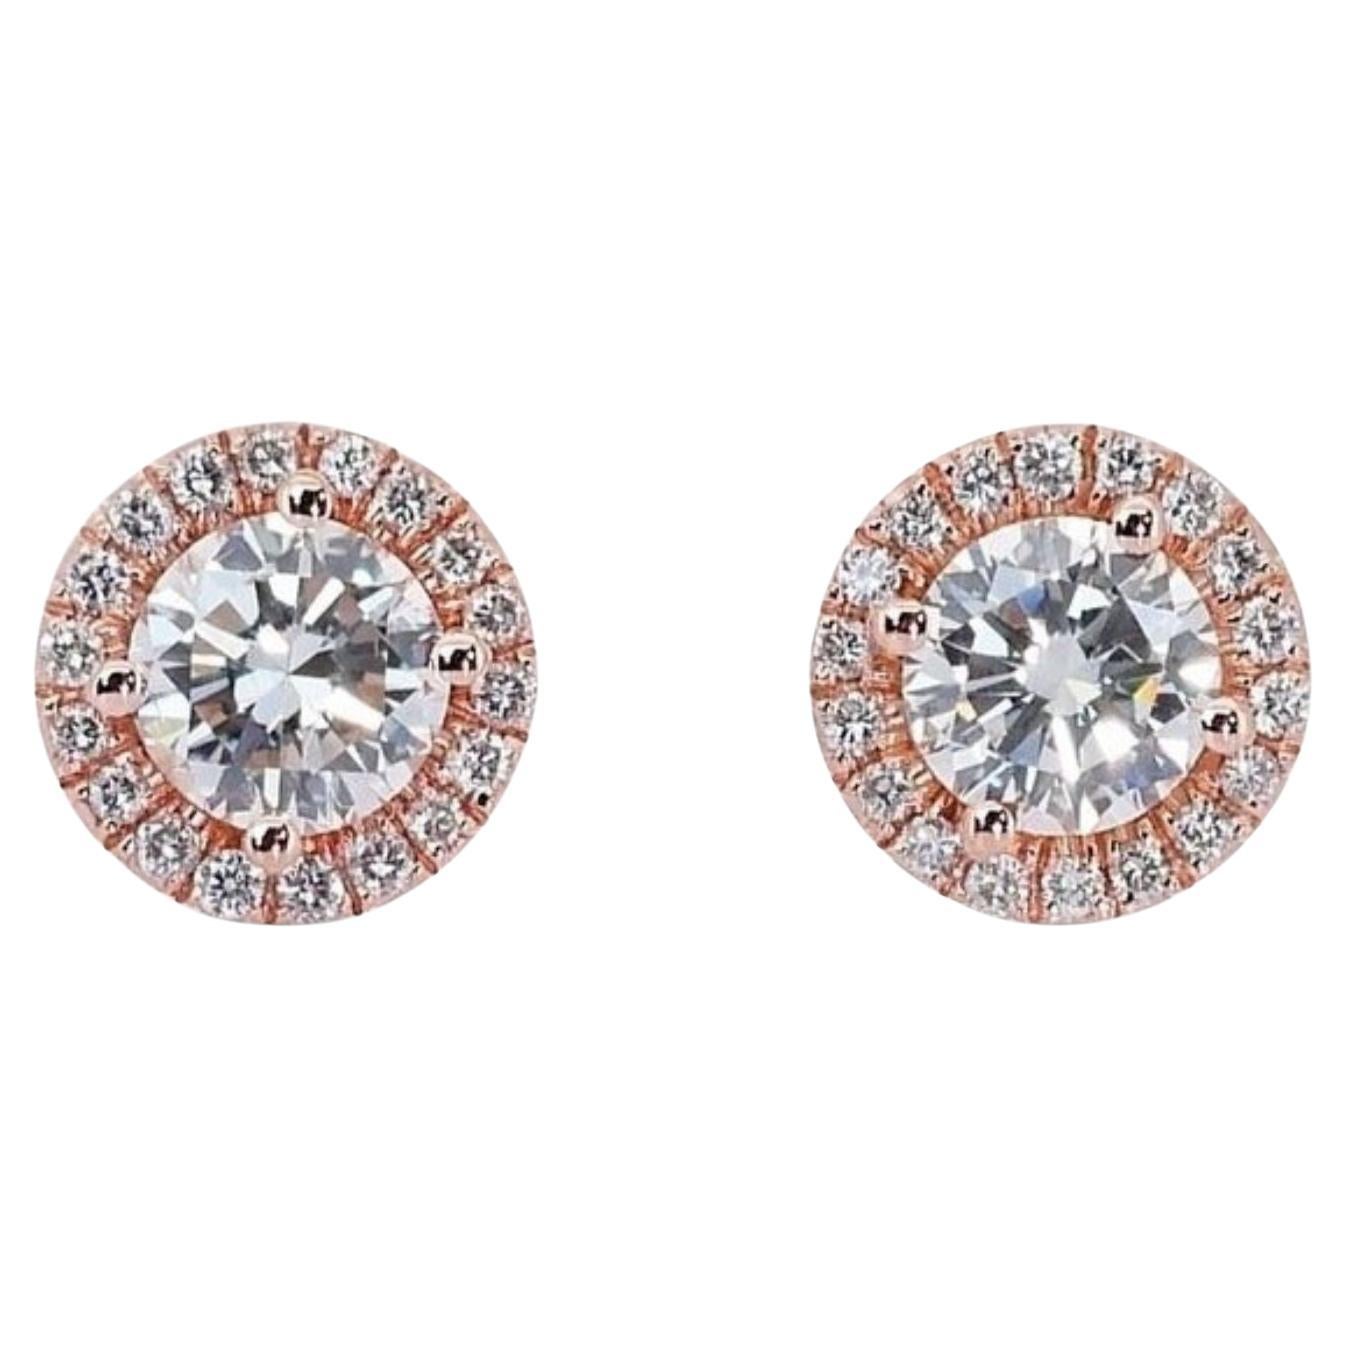 Stunning Diamond Earrings with 1.2 carat Round Brilliant Diamond